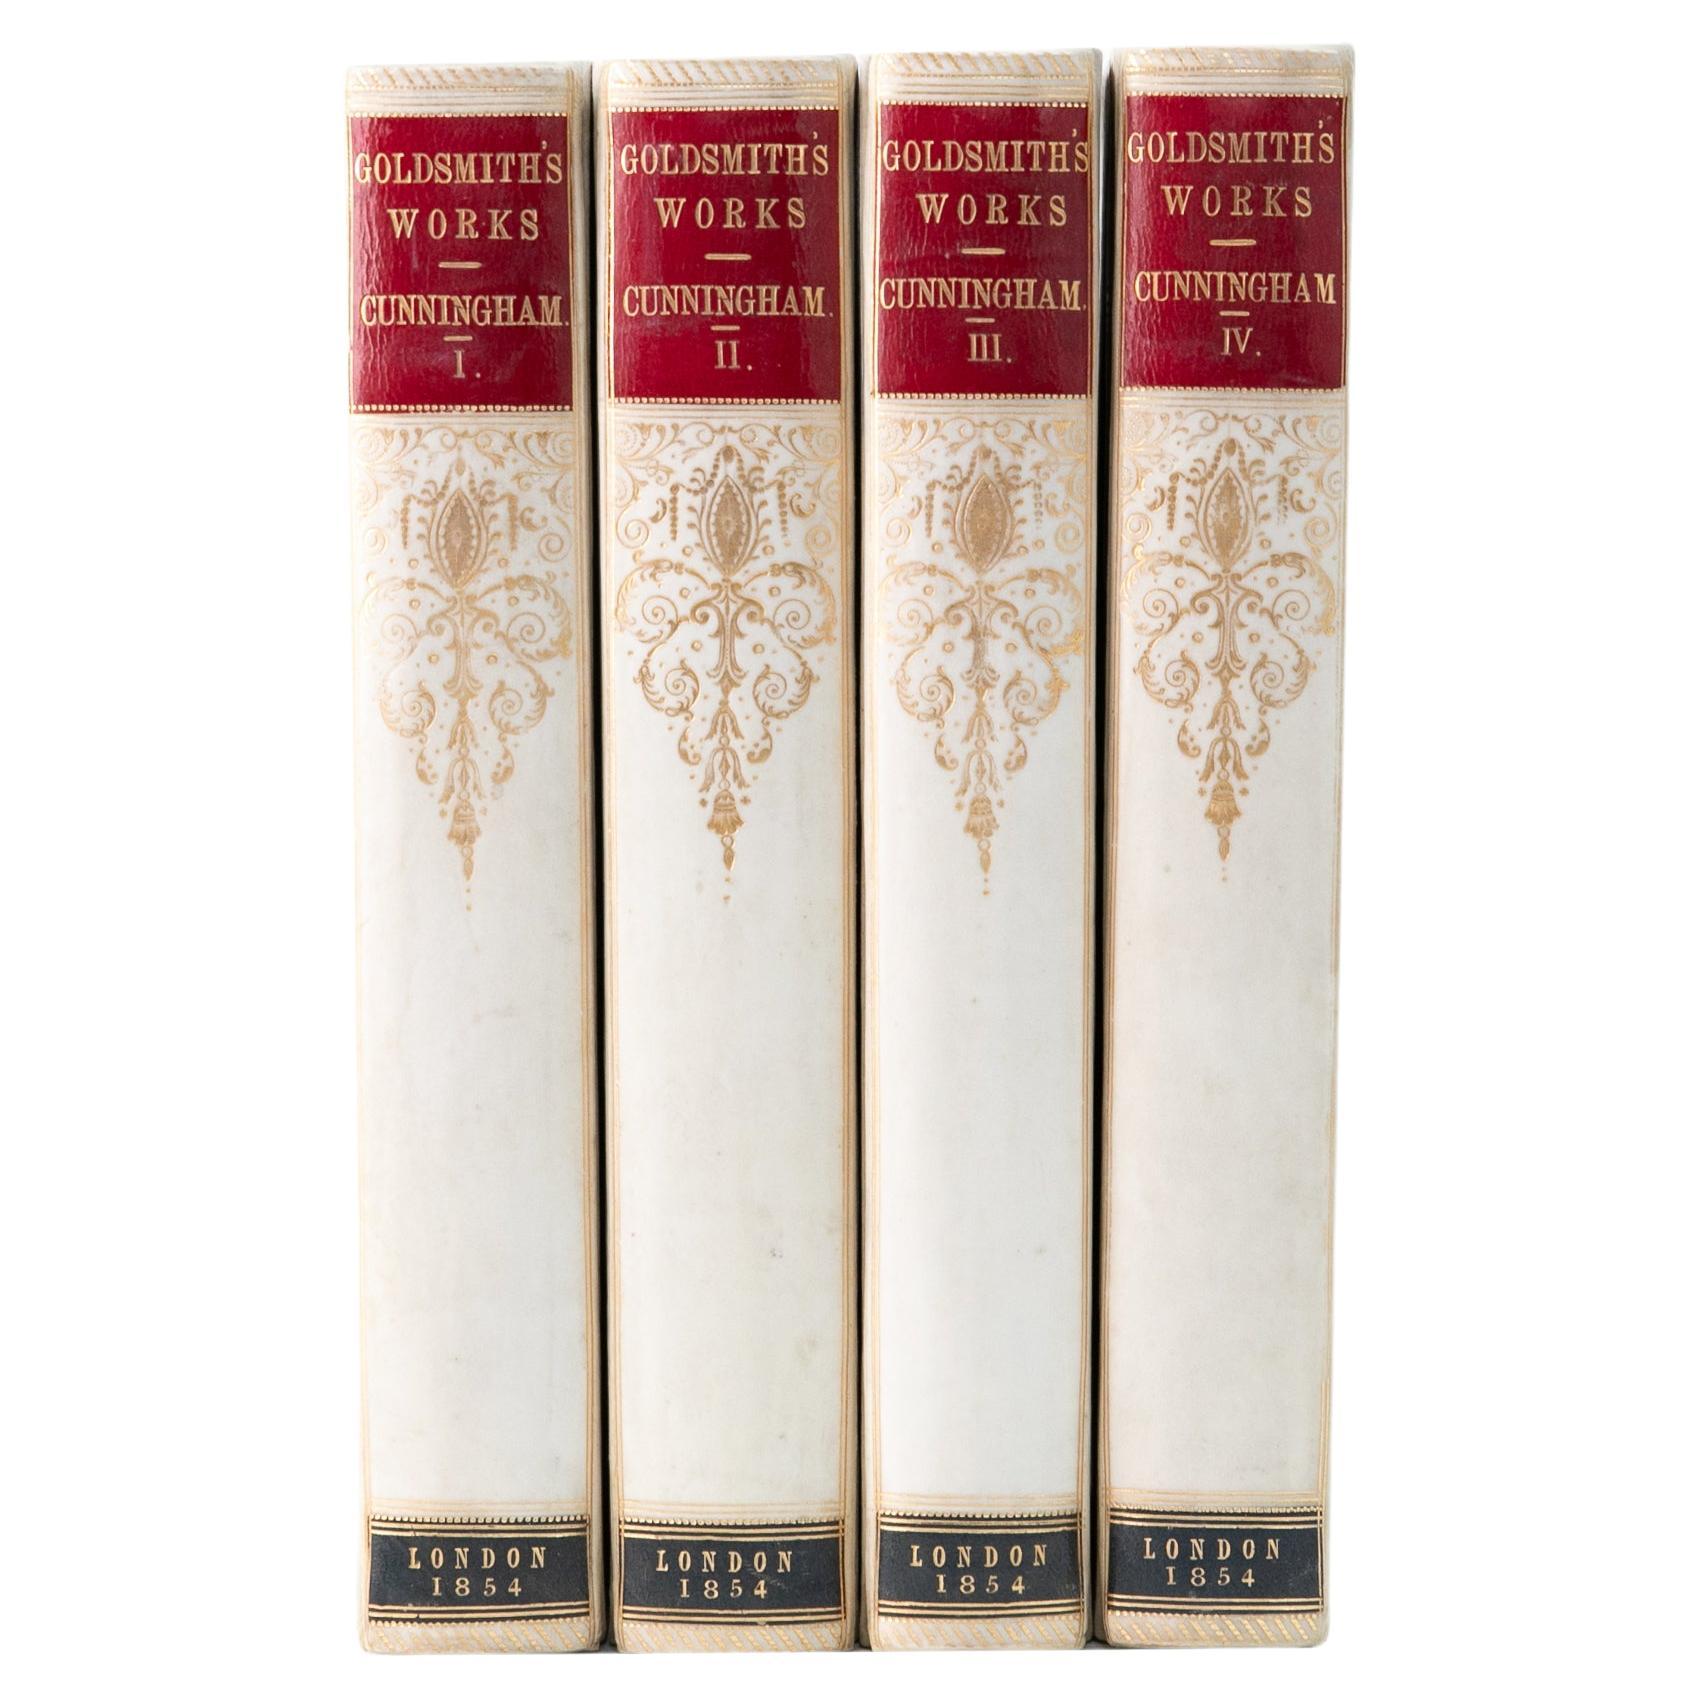 4 Volumes. Oliver Goldsmith, The Works